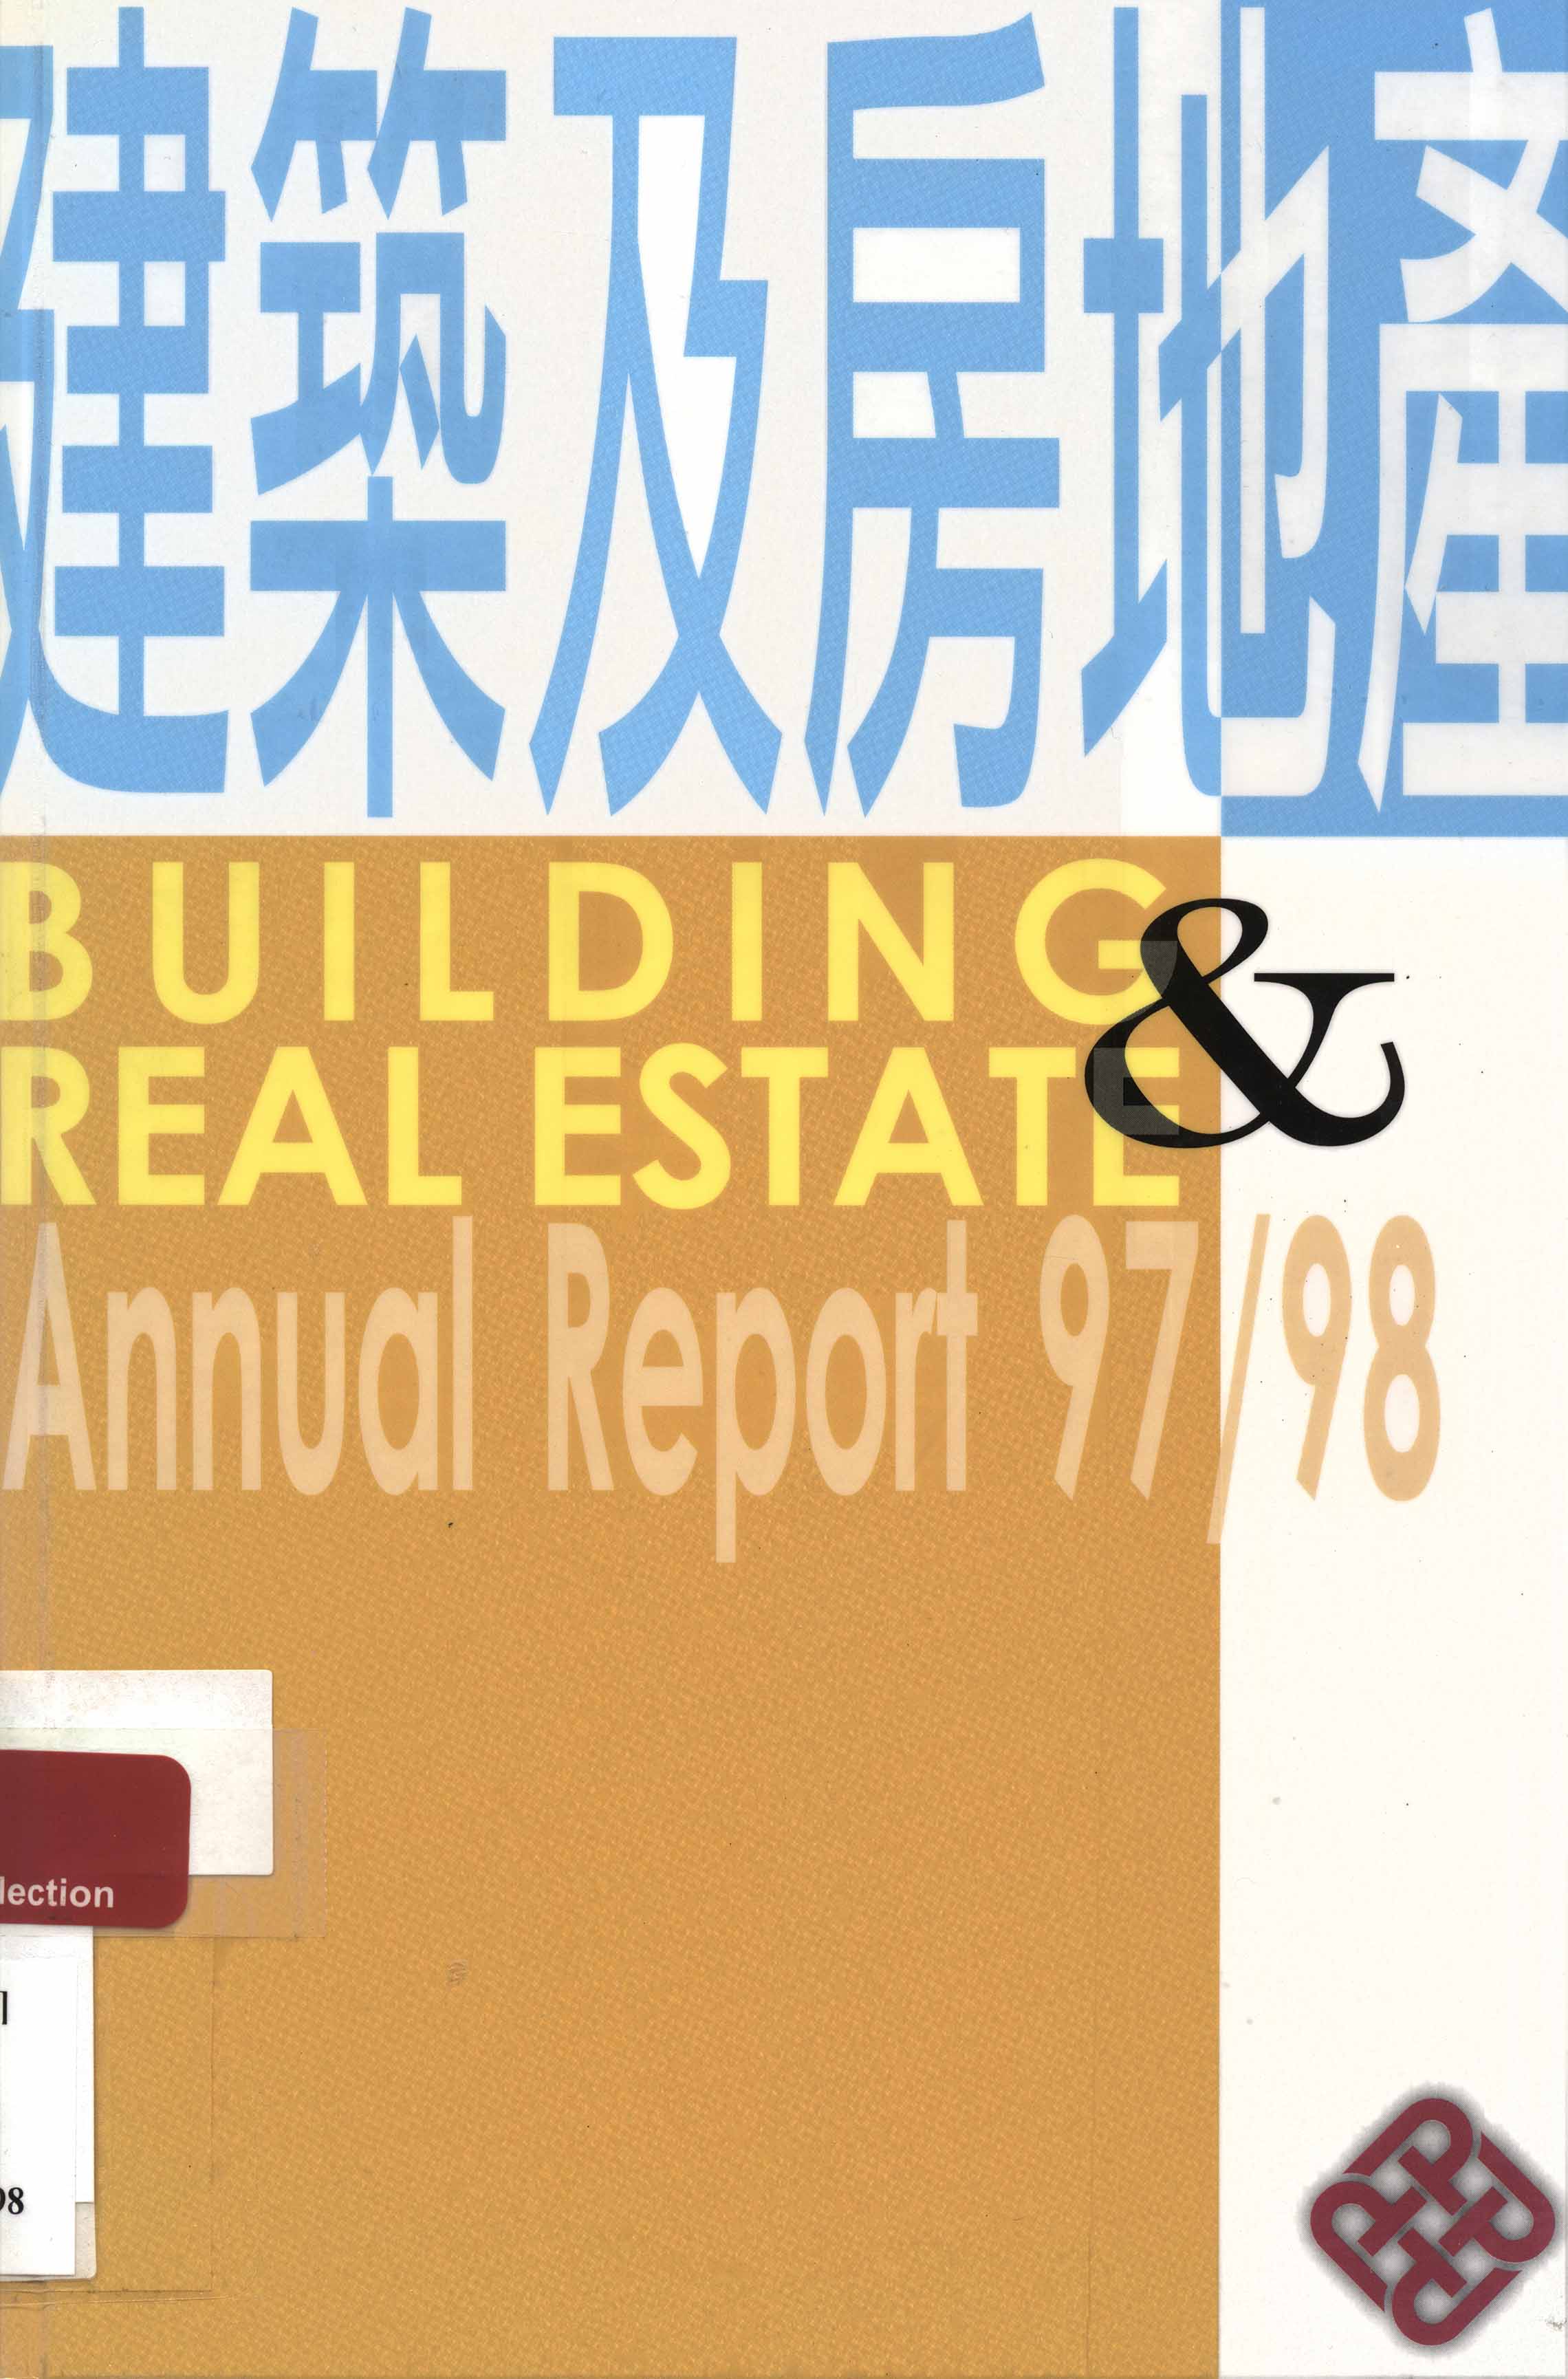 Building & real estate annual report 97/98